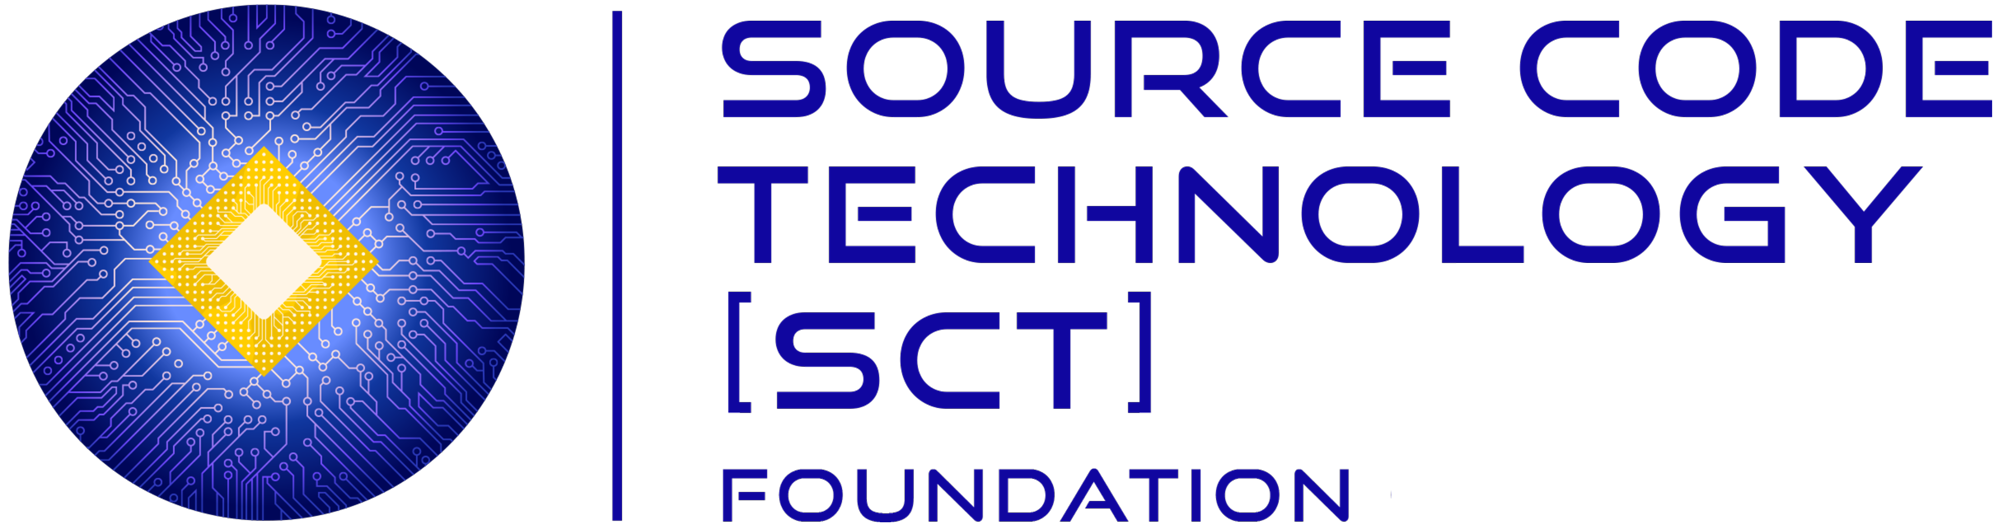 Source Code Technology (SCT) Foundation